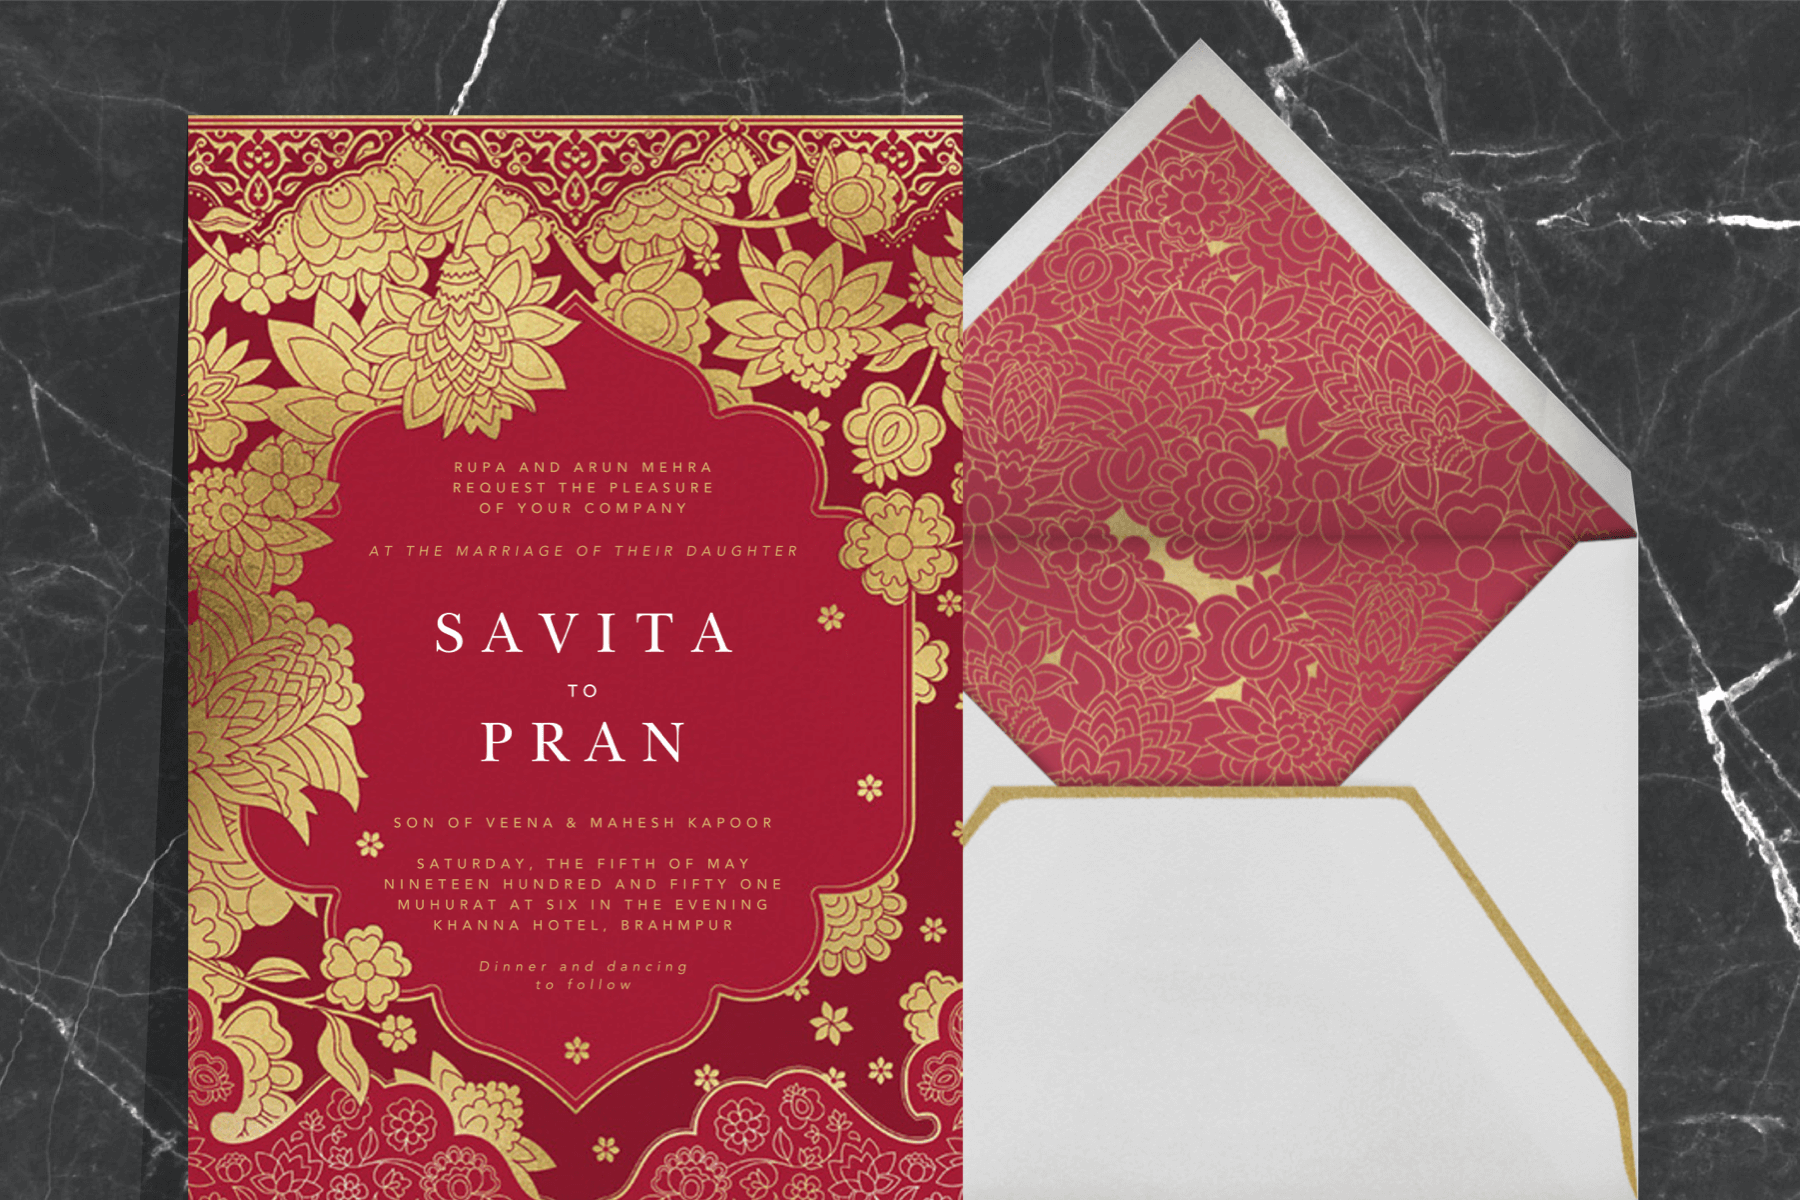 A maroon wedding invitation with gold-leaf flowers.